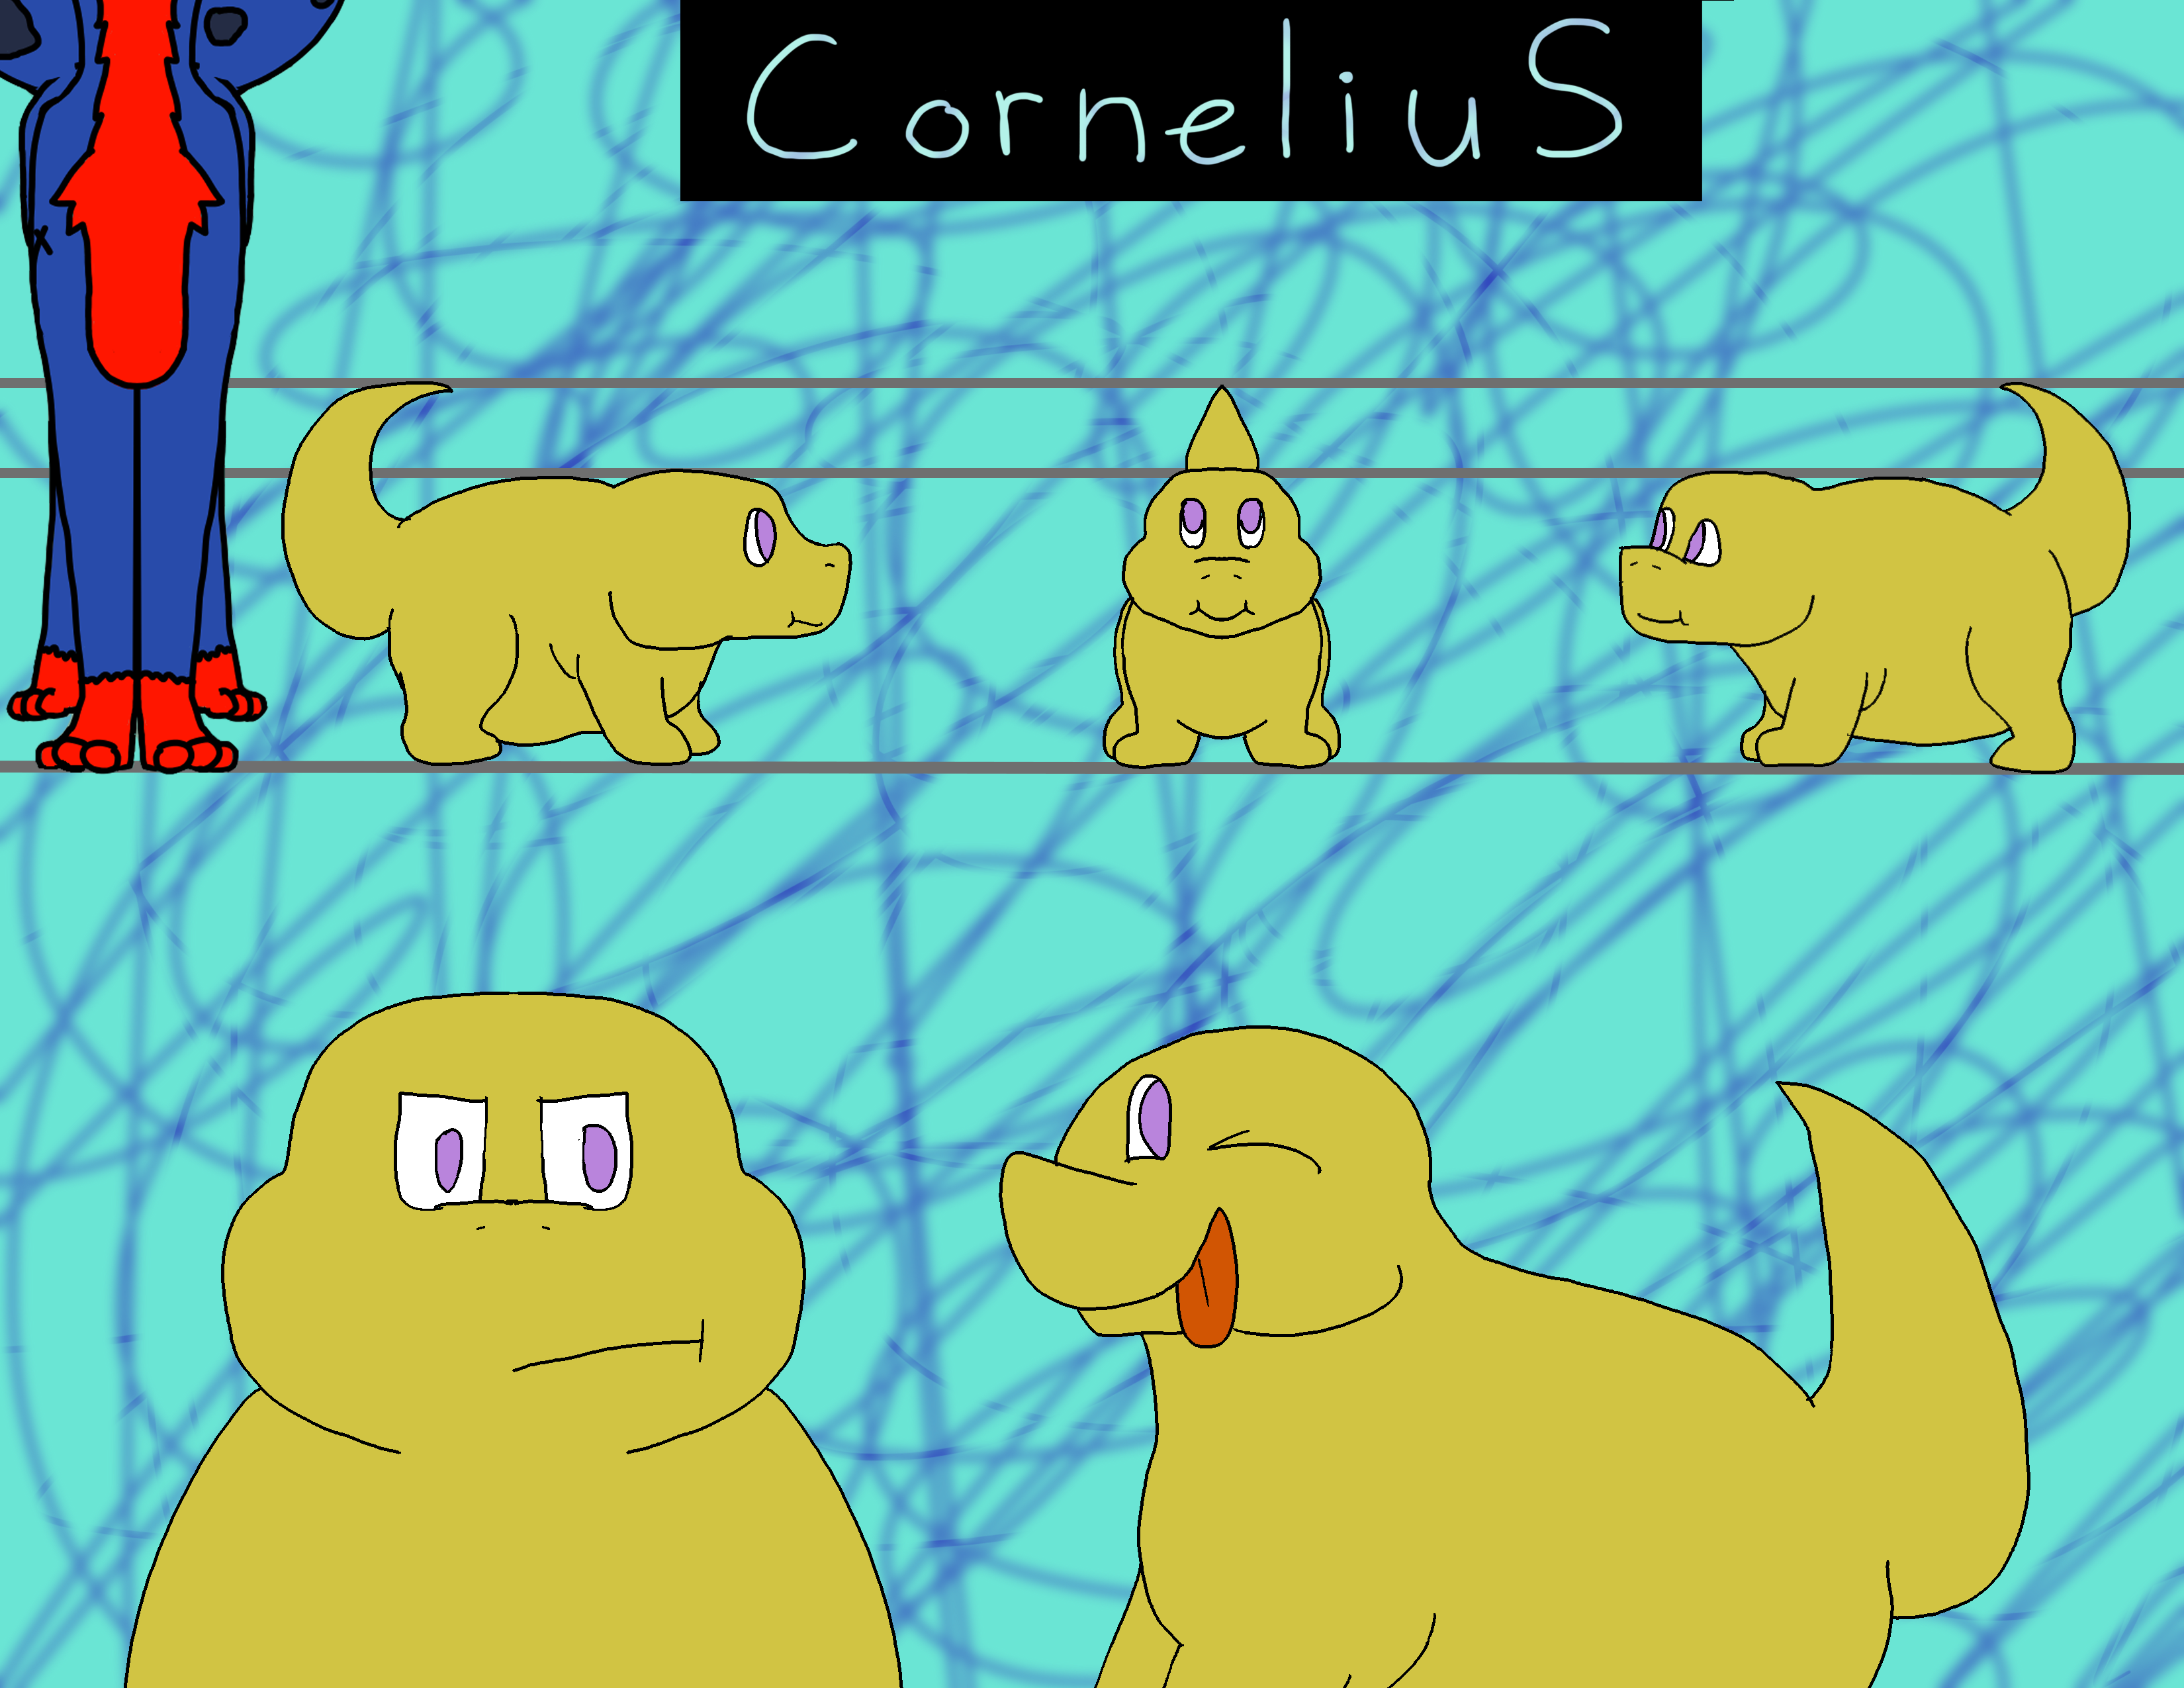 Cornelius character sheet